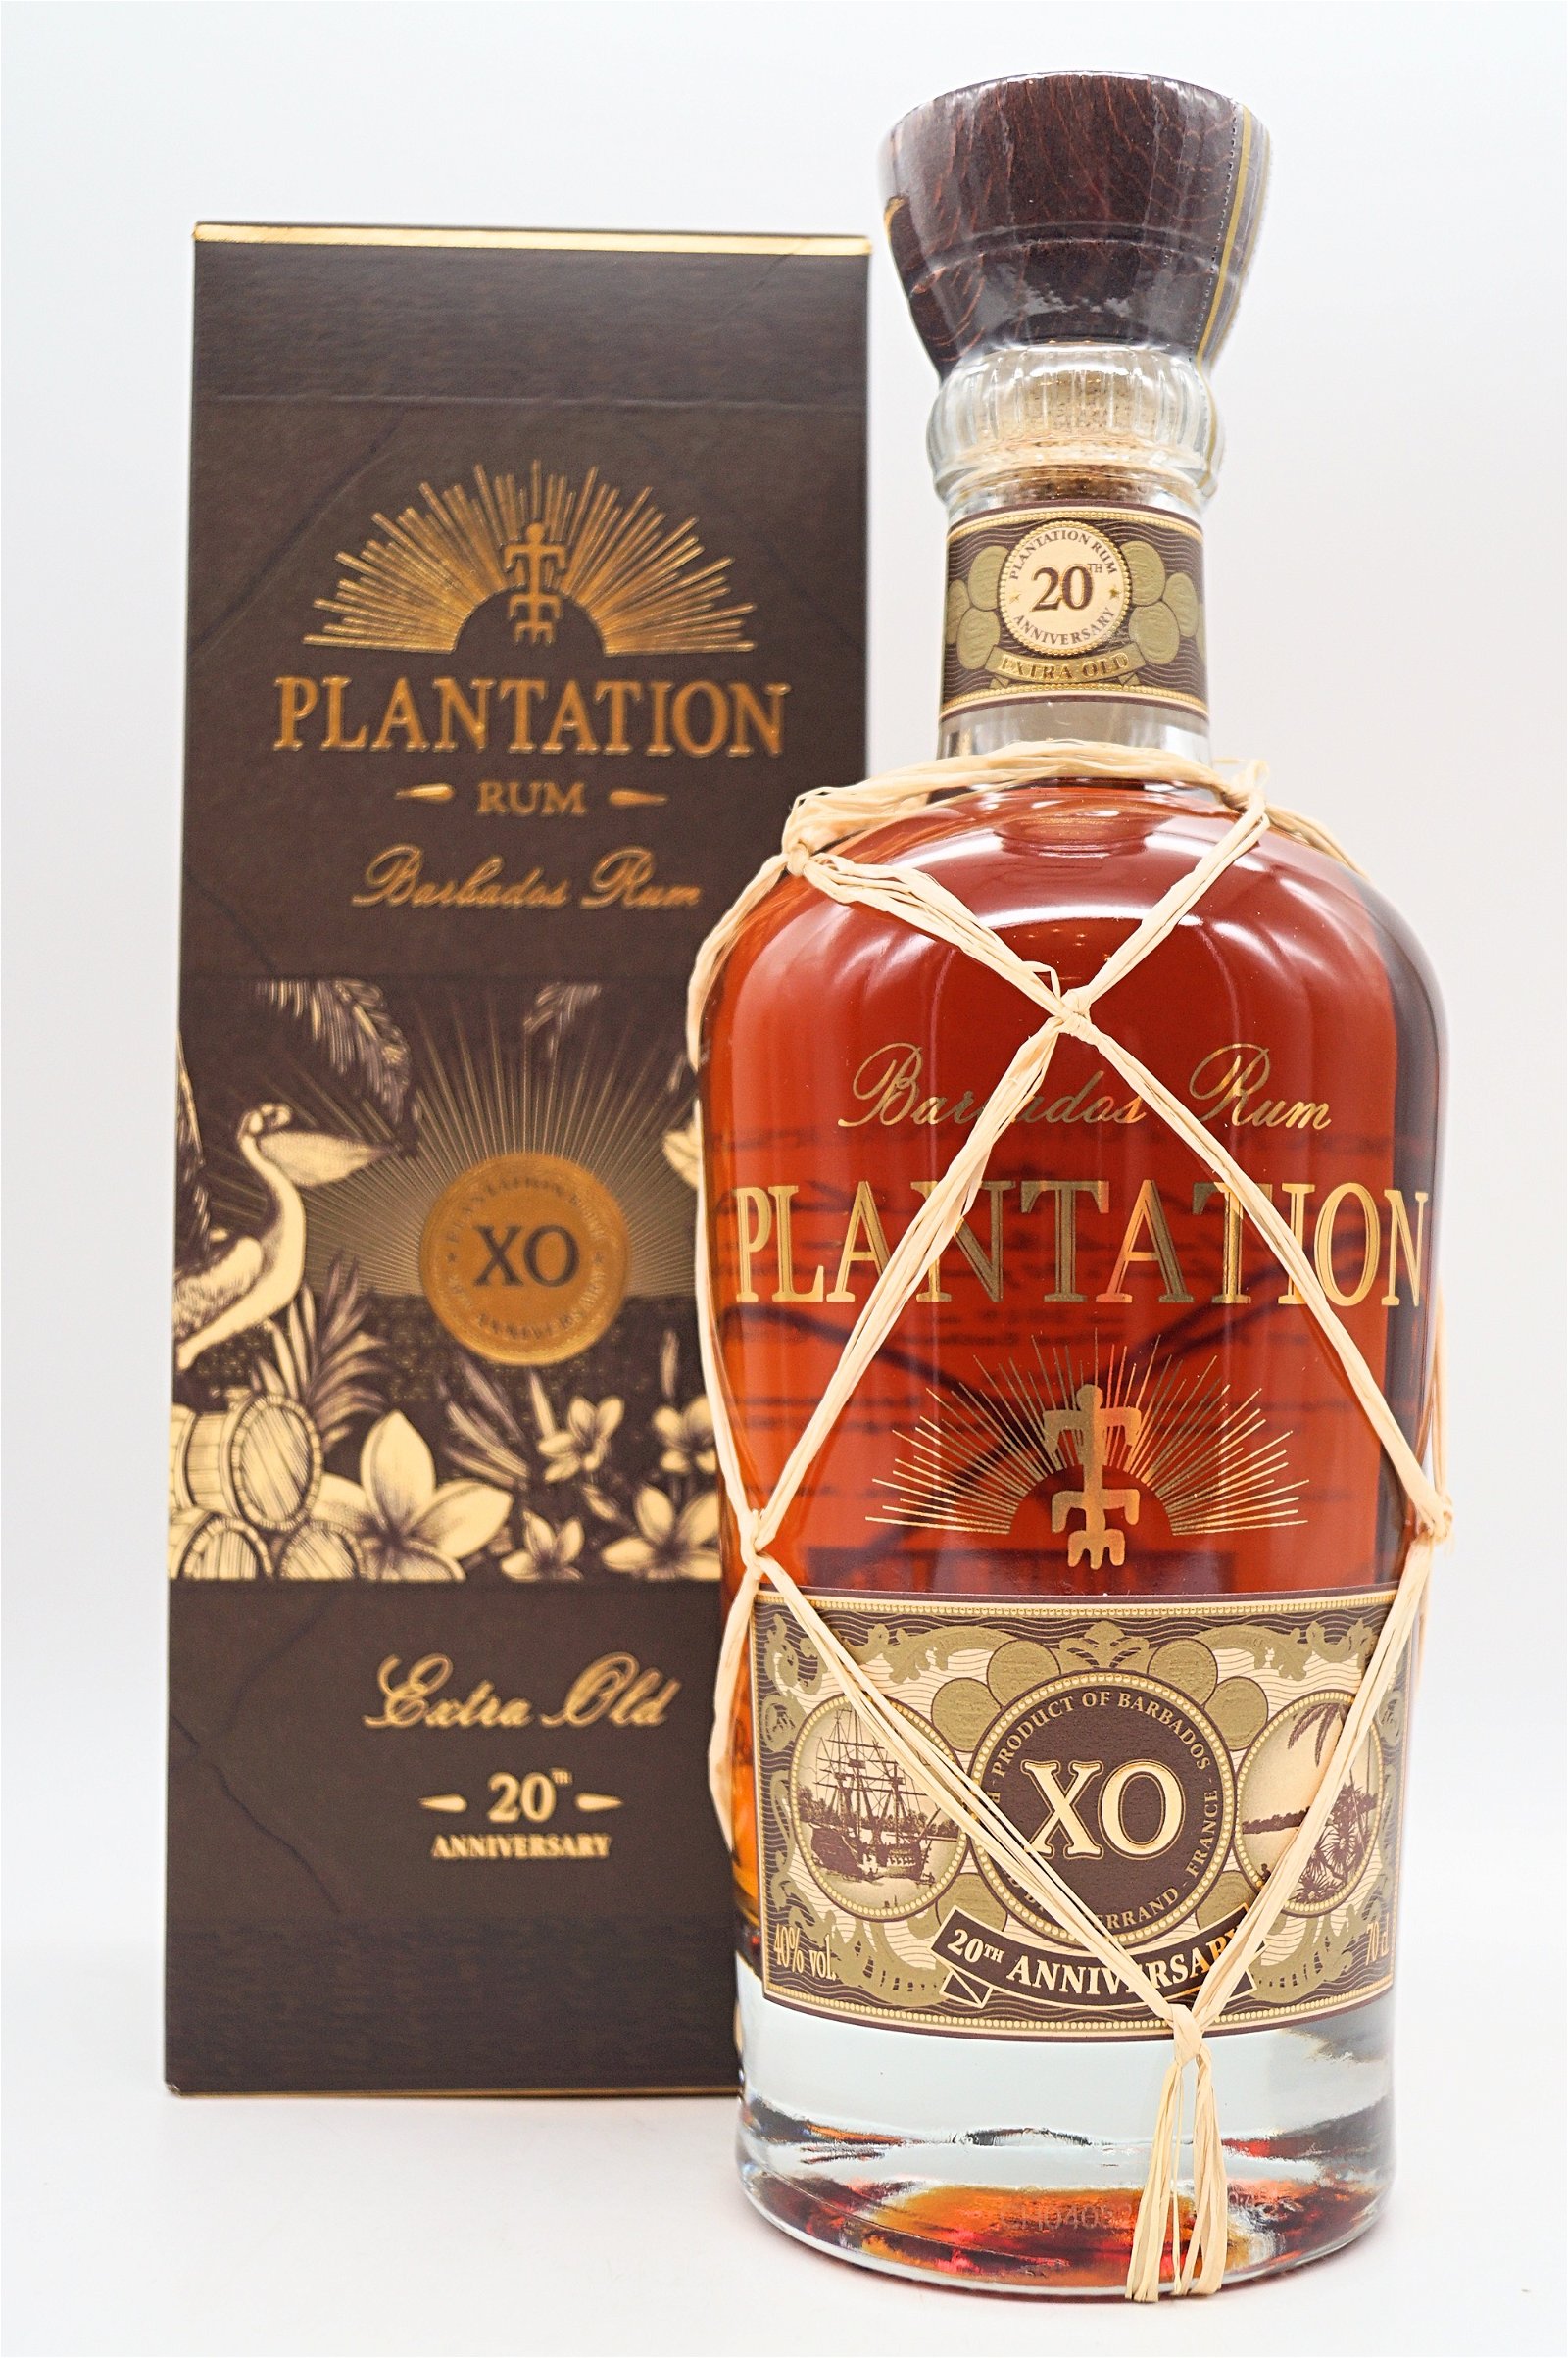 Plantation Rum XO 20th Anniversary Extra Old Barbados Rum